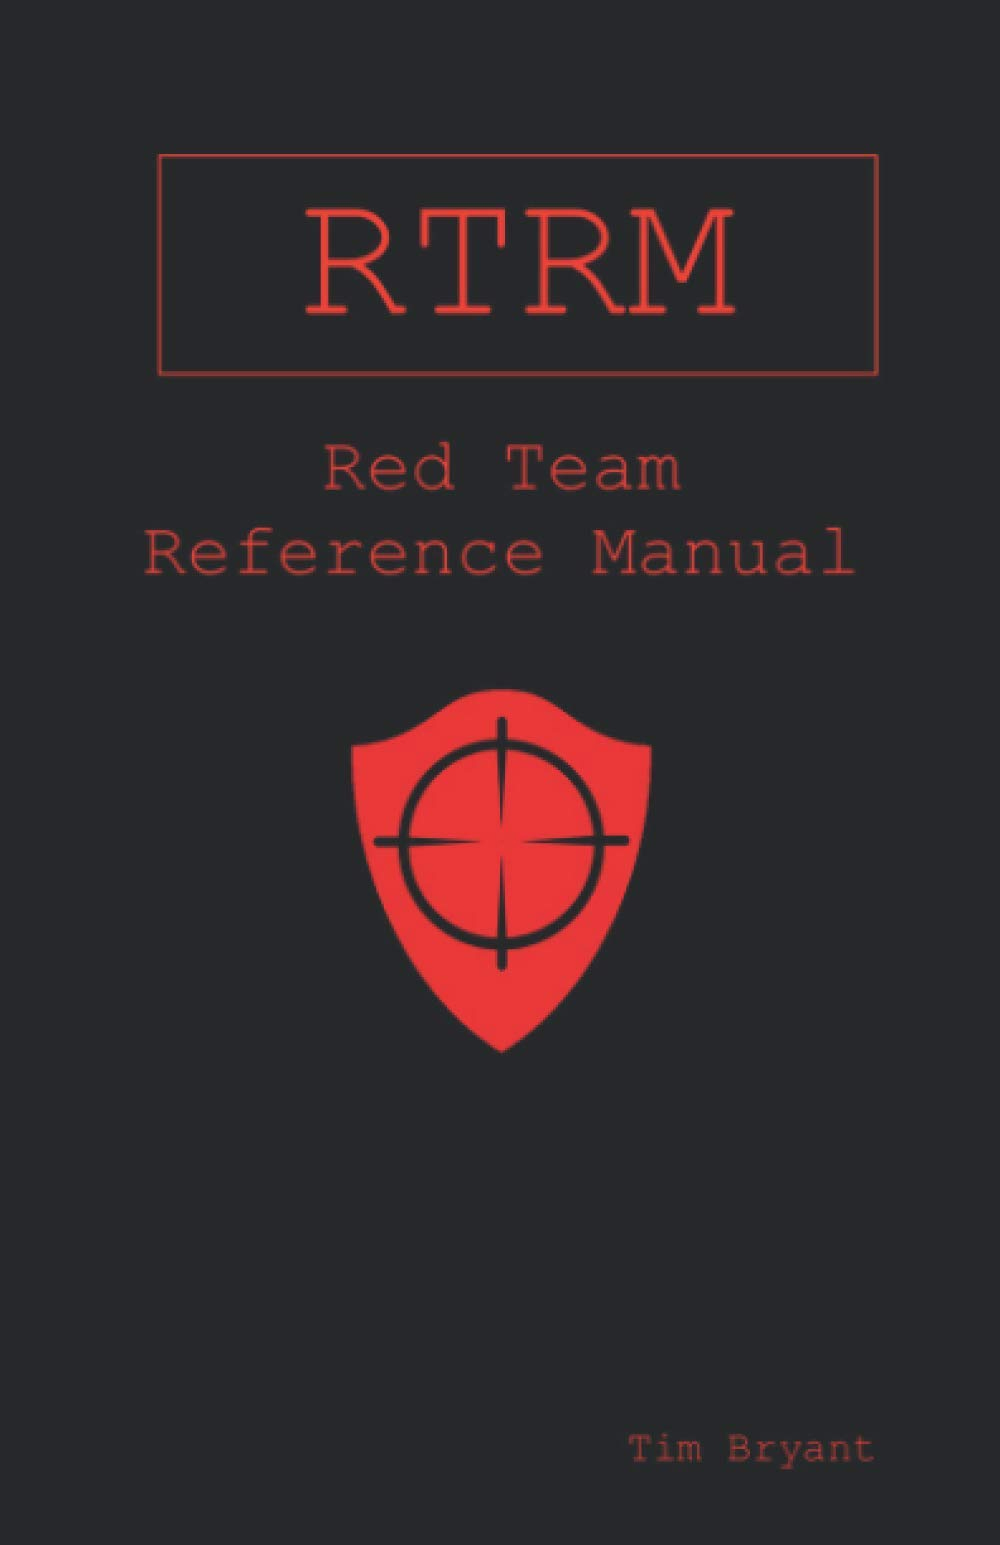 Rtfm: Red Team Field Manual